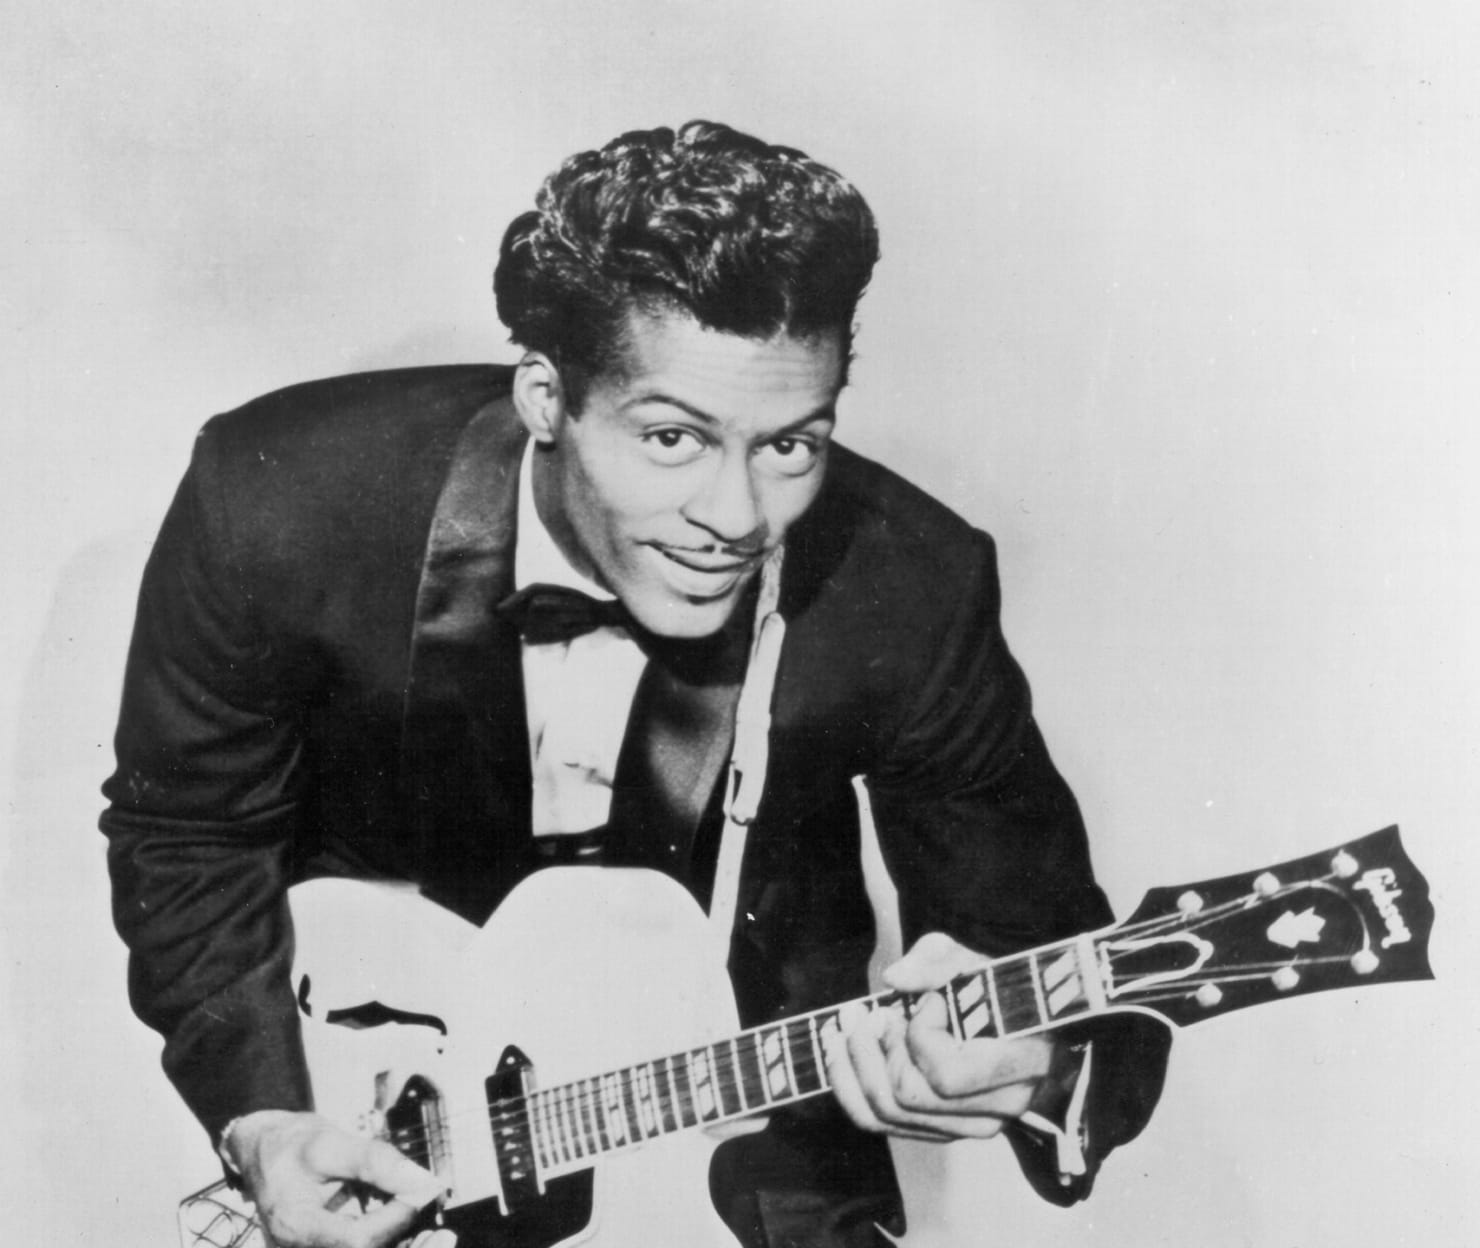 Remembering Rock n Roll Pioneer Chuck Berry